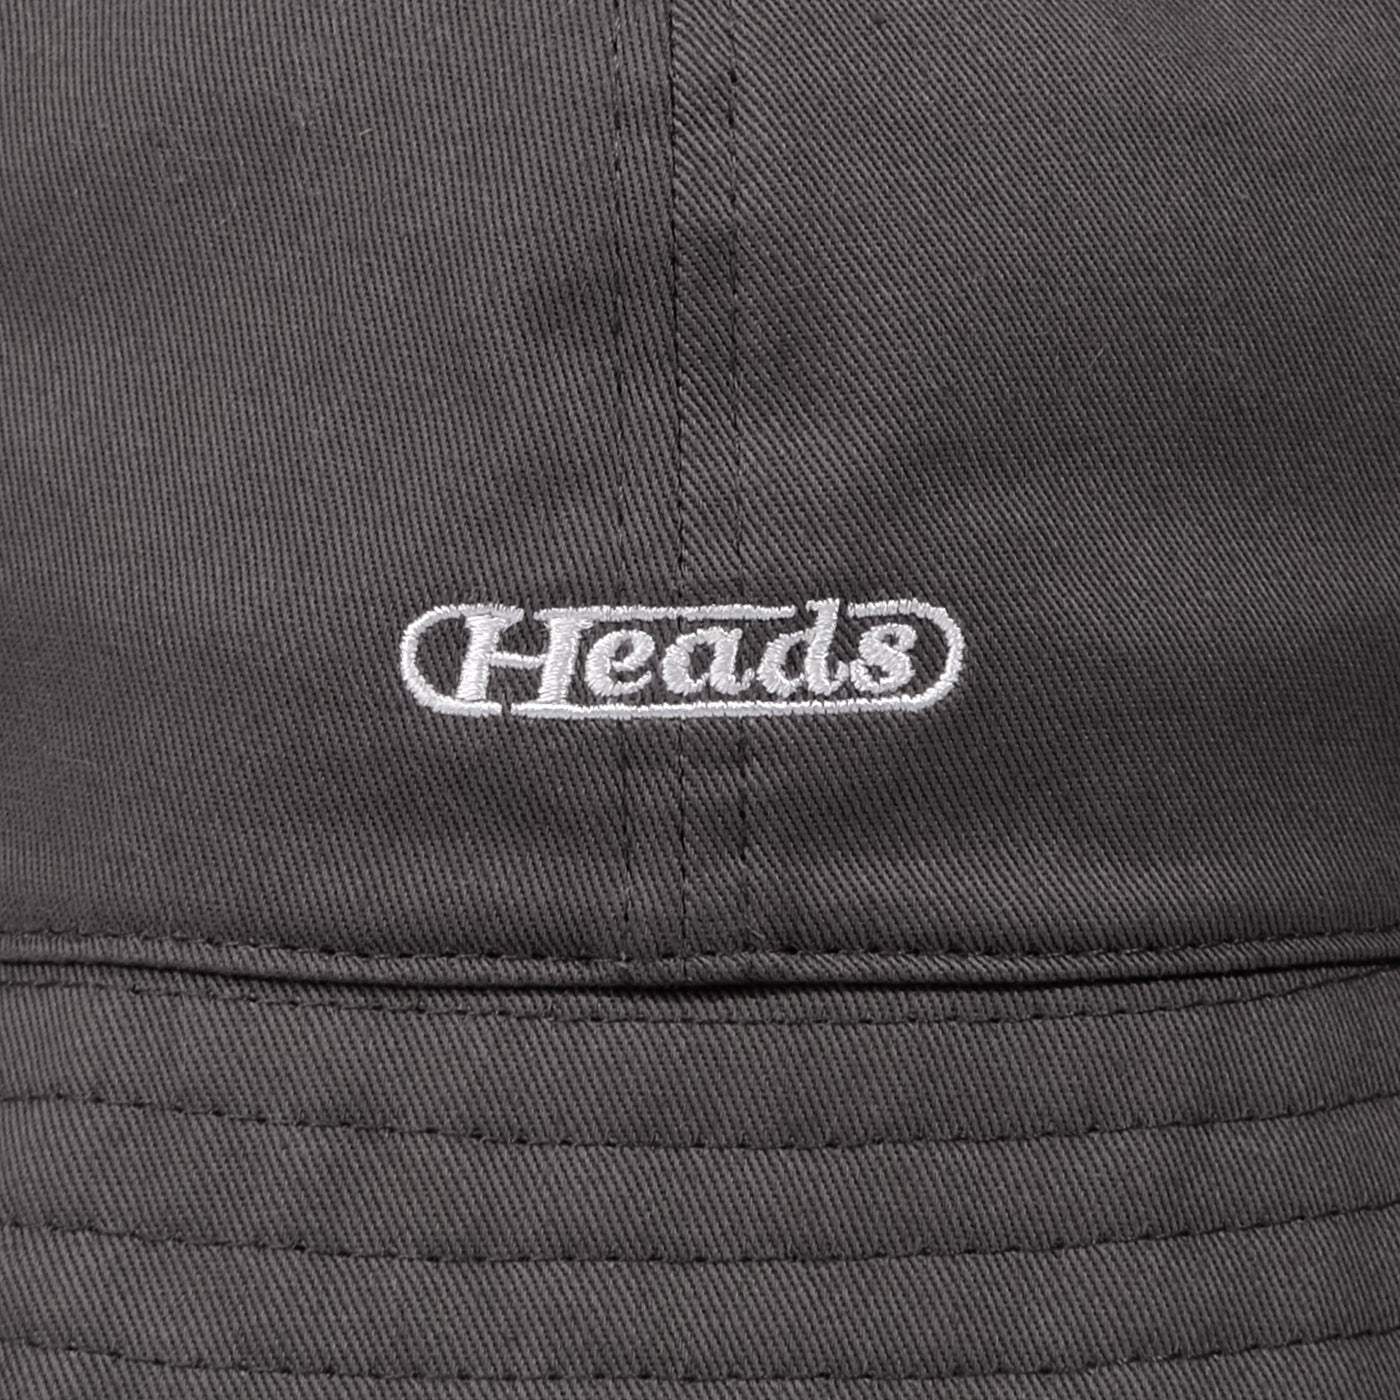 Heads Bowl Hat Canvas